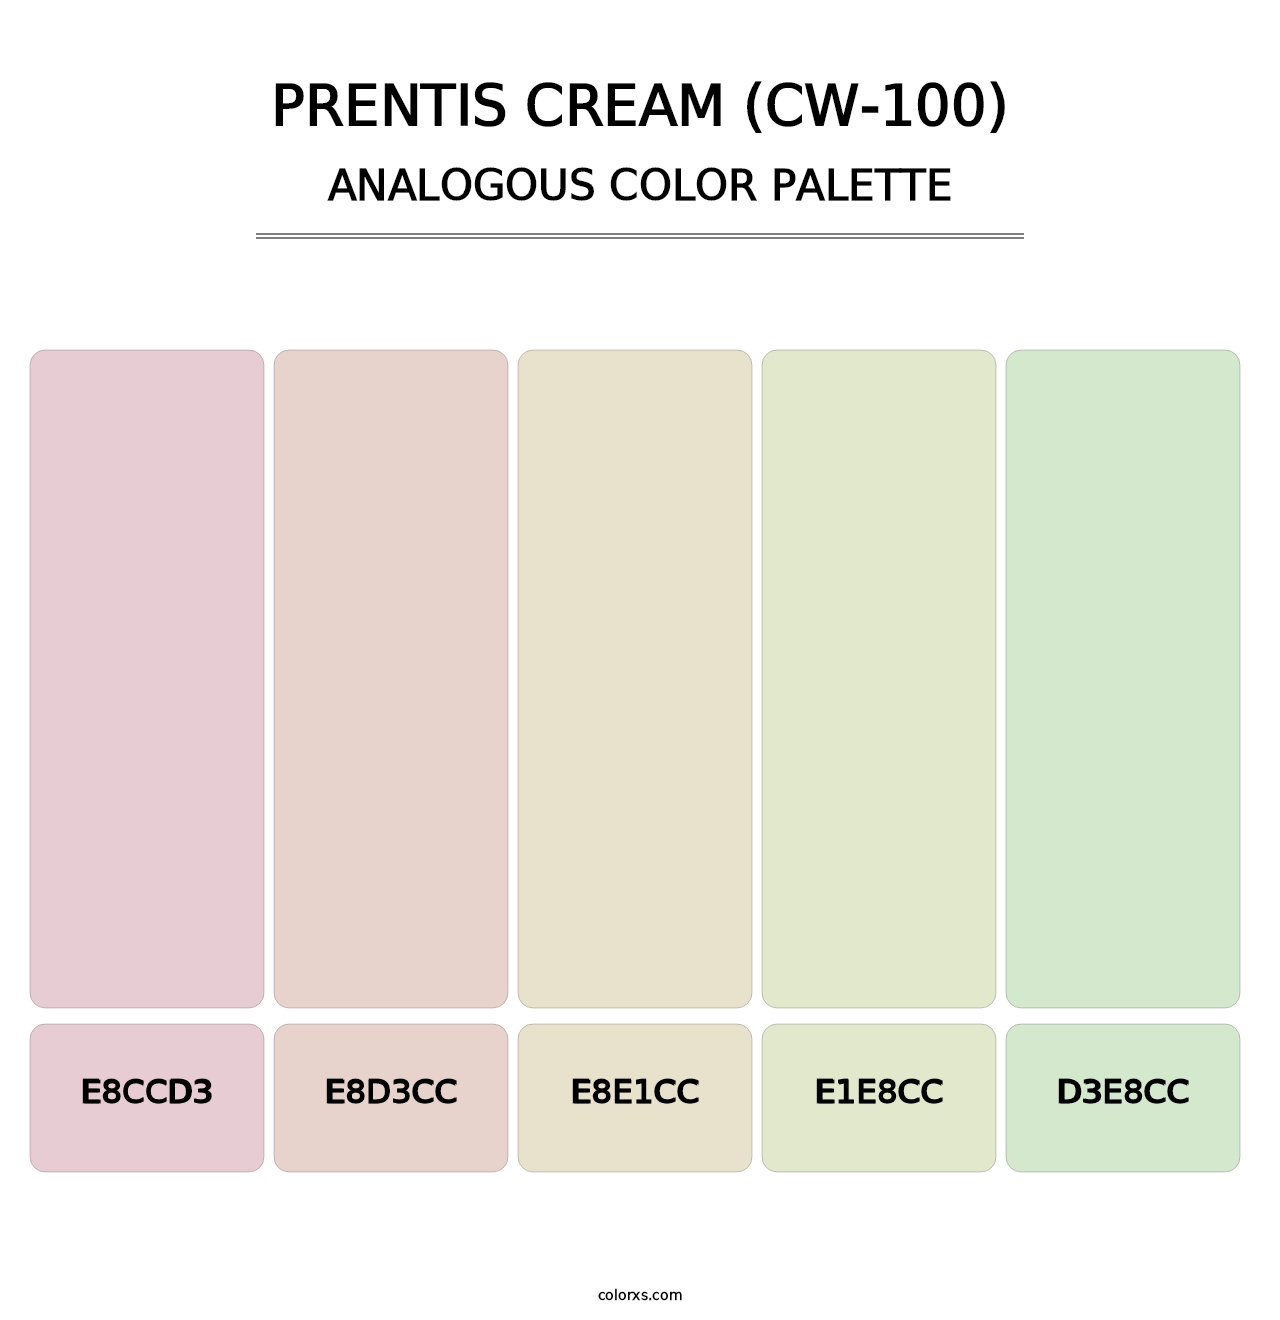 Prentis Cream (CW-100) - Analogous Color Palette